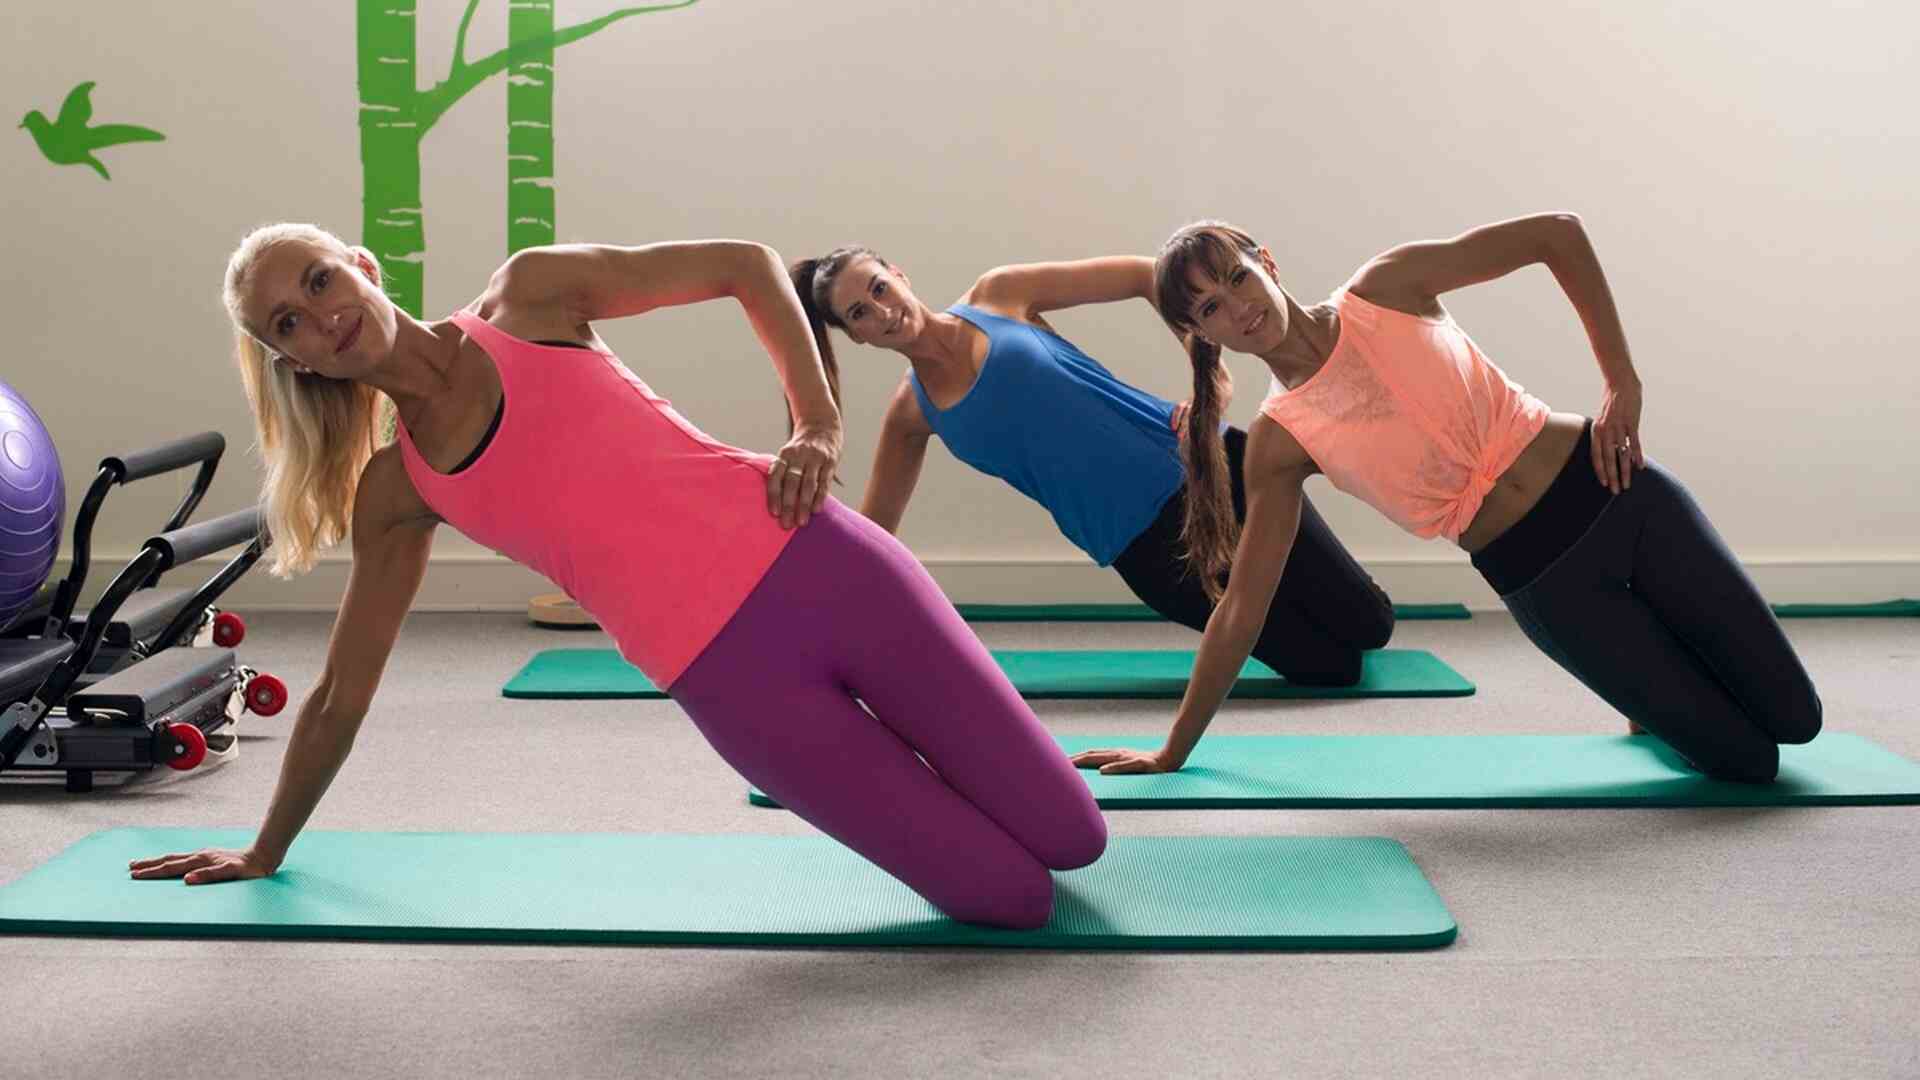 Pilates Exercises for Balance and Flexibility, Learn Pilates